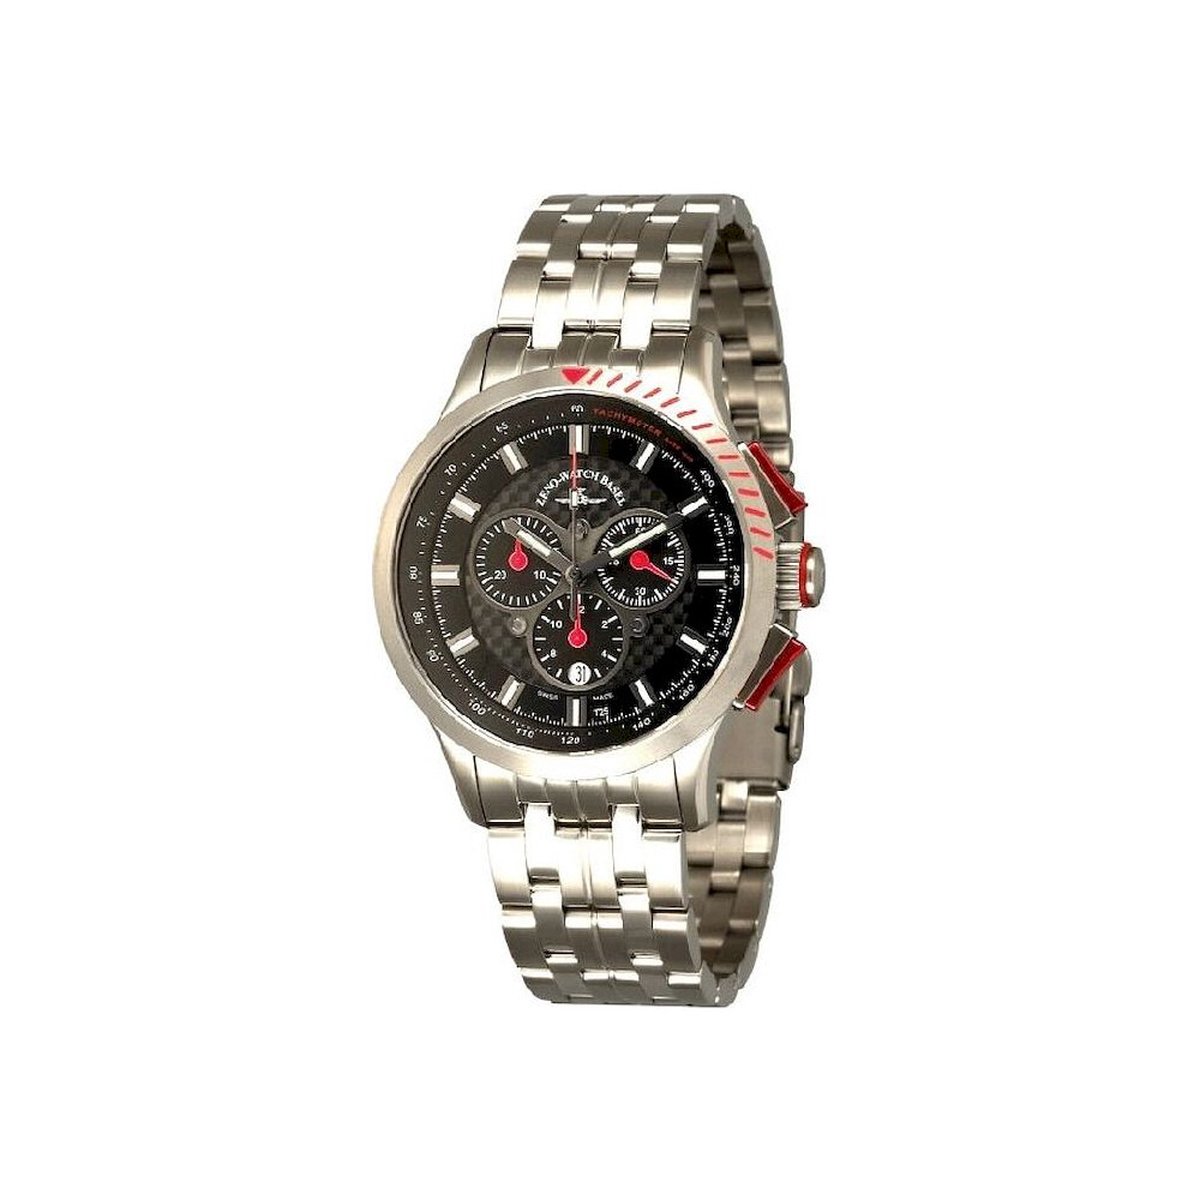 Zeno-Watch Herenhorloge - Sport H3 Fashion Chronograaf - 6702-5030Q-s1-7M